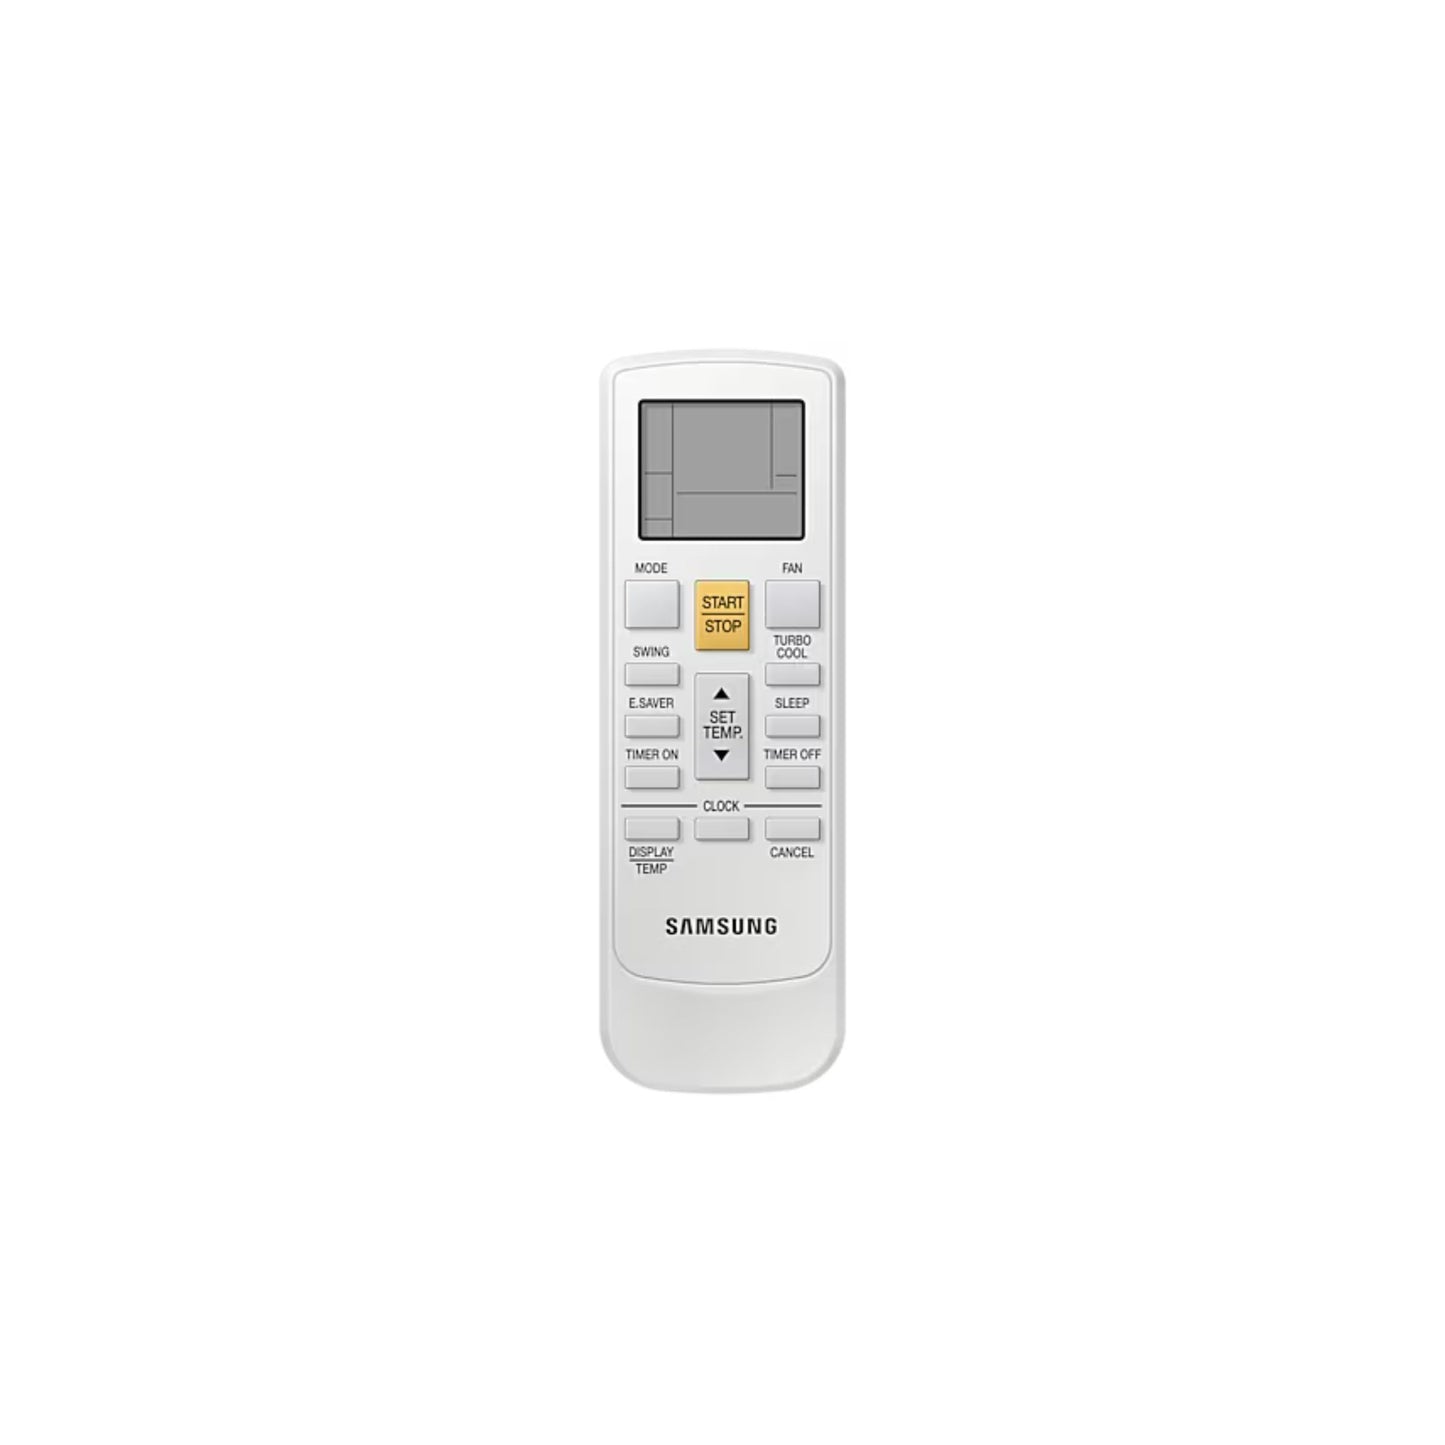 Samsung Inverter Split 1.0 TR 3 Star AC Remote Control